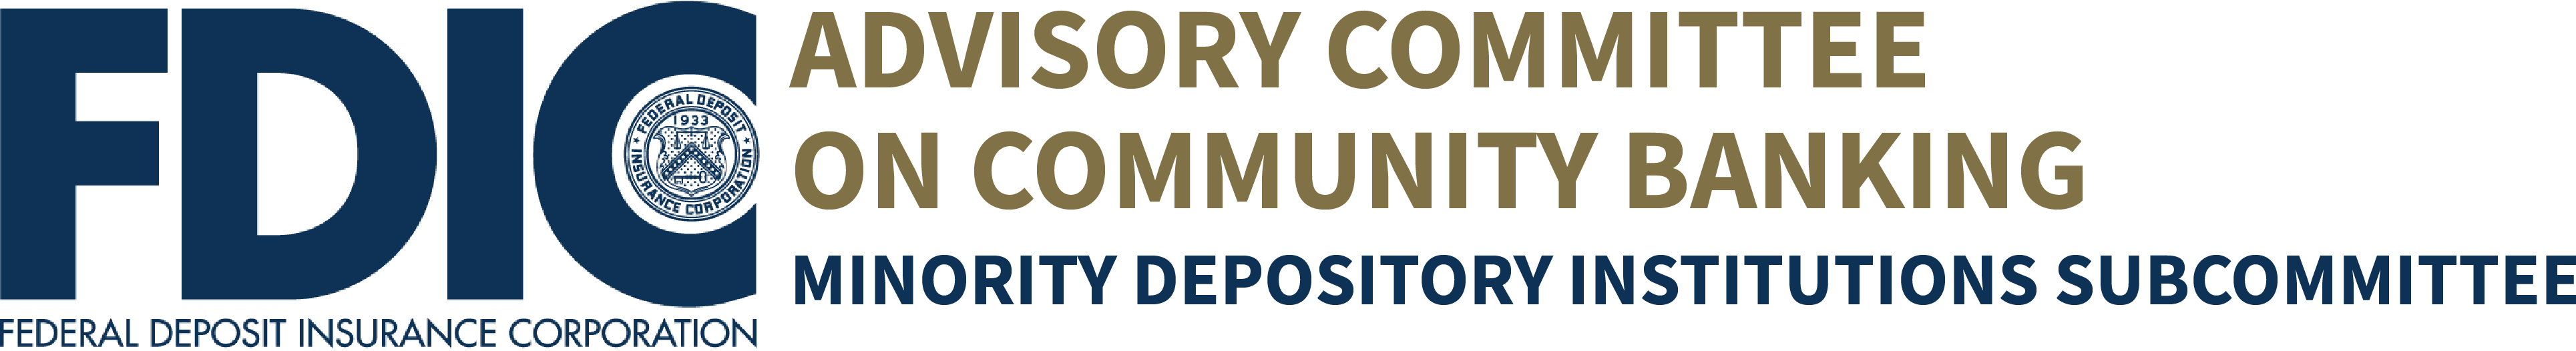 Minority Depository Institutions Subcommittee logo